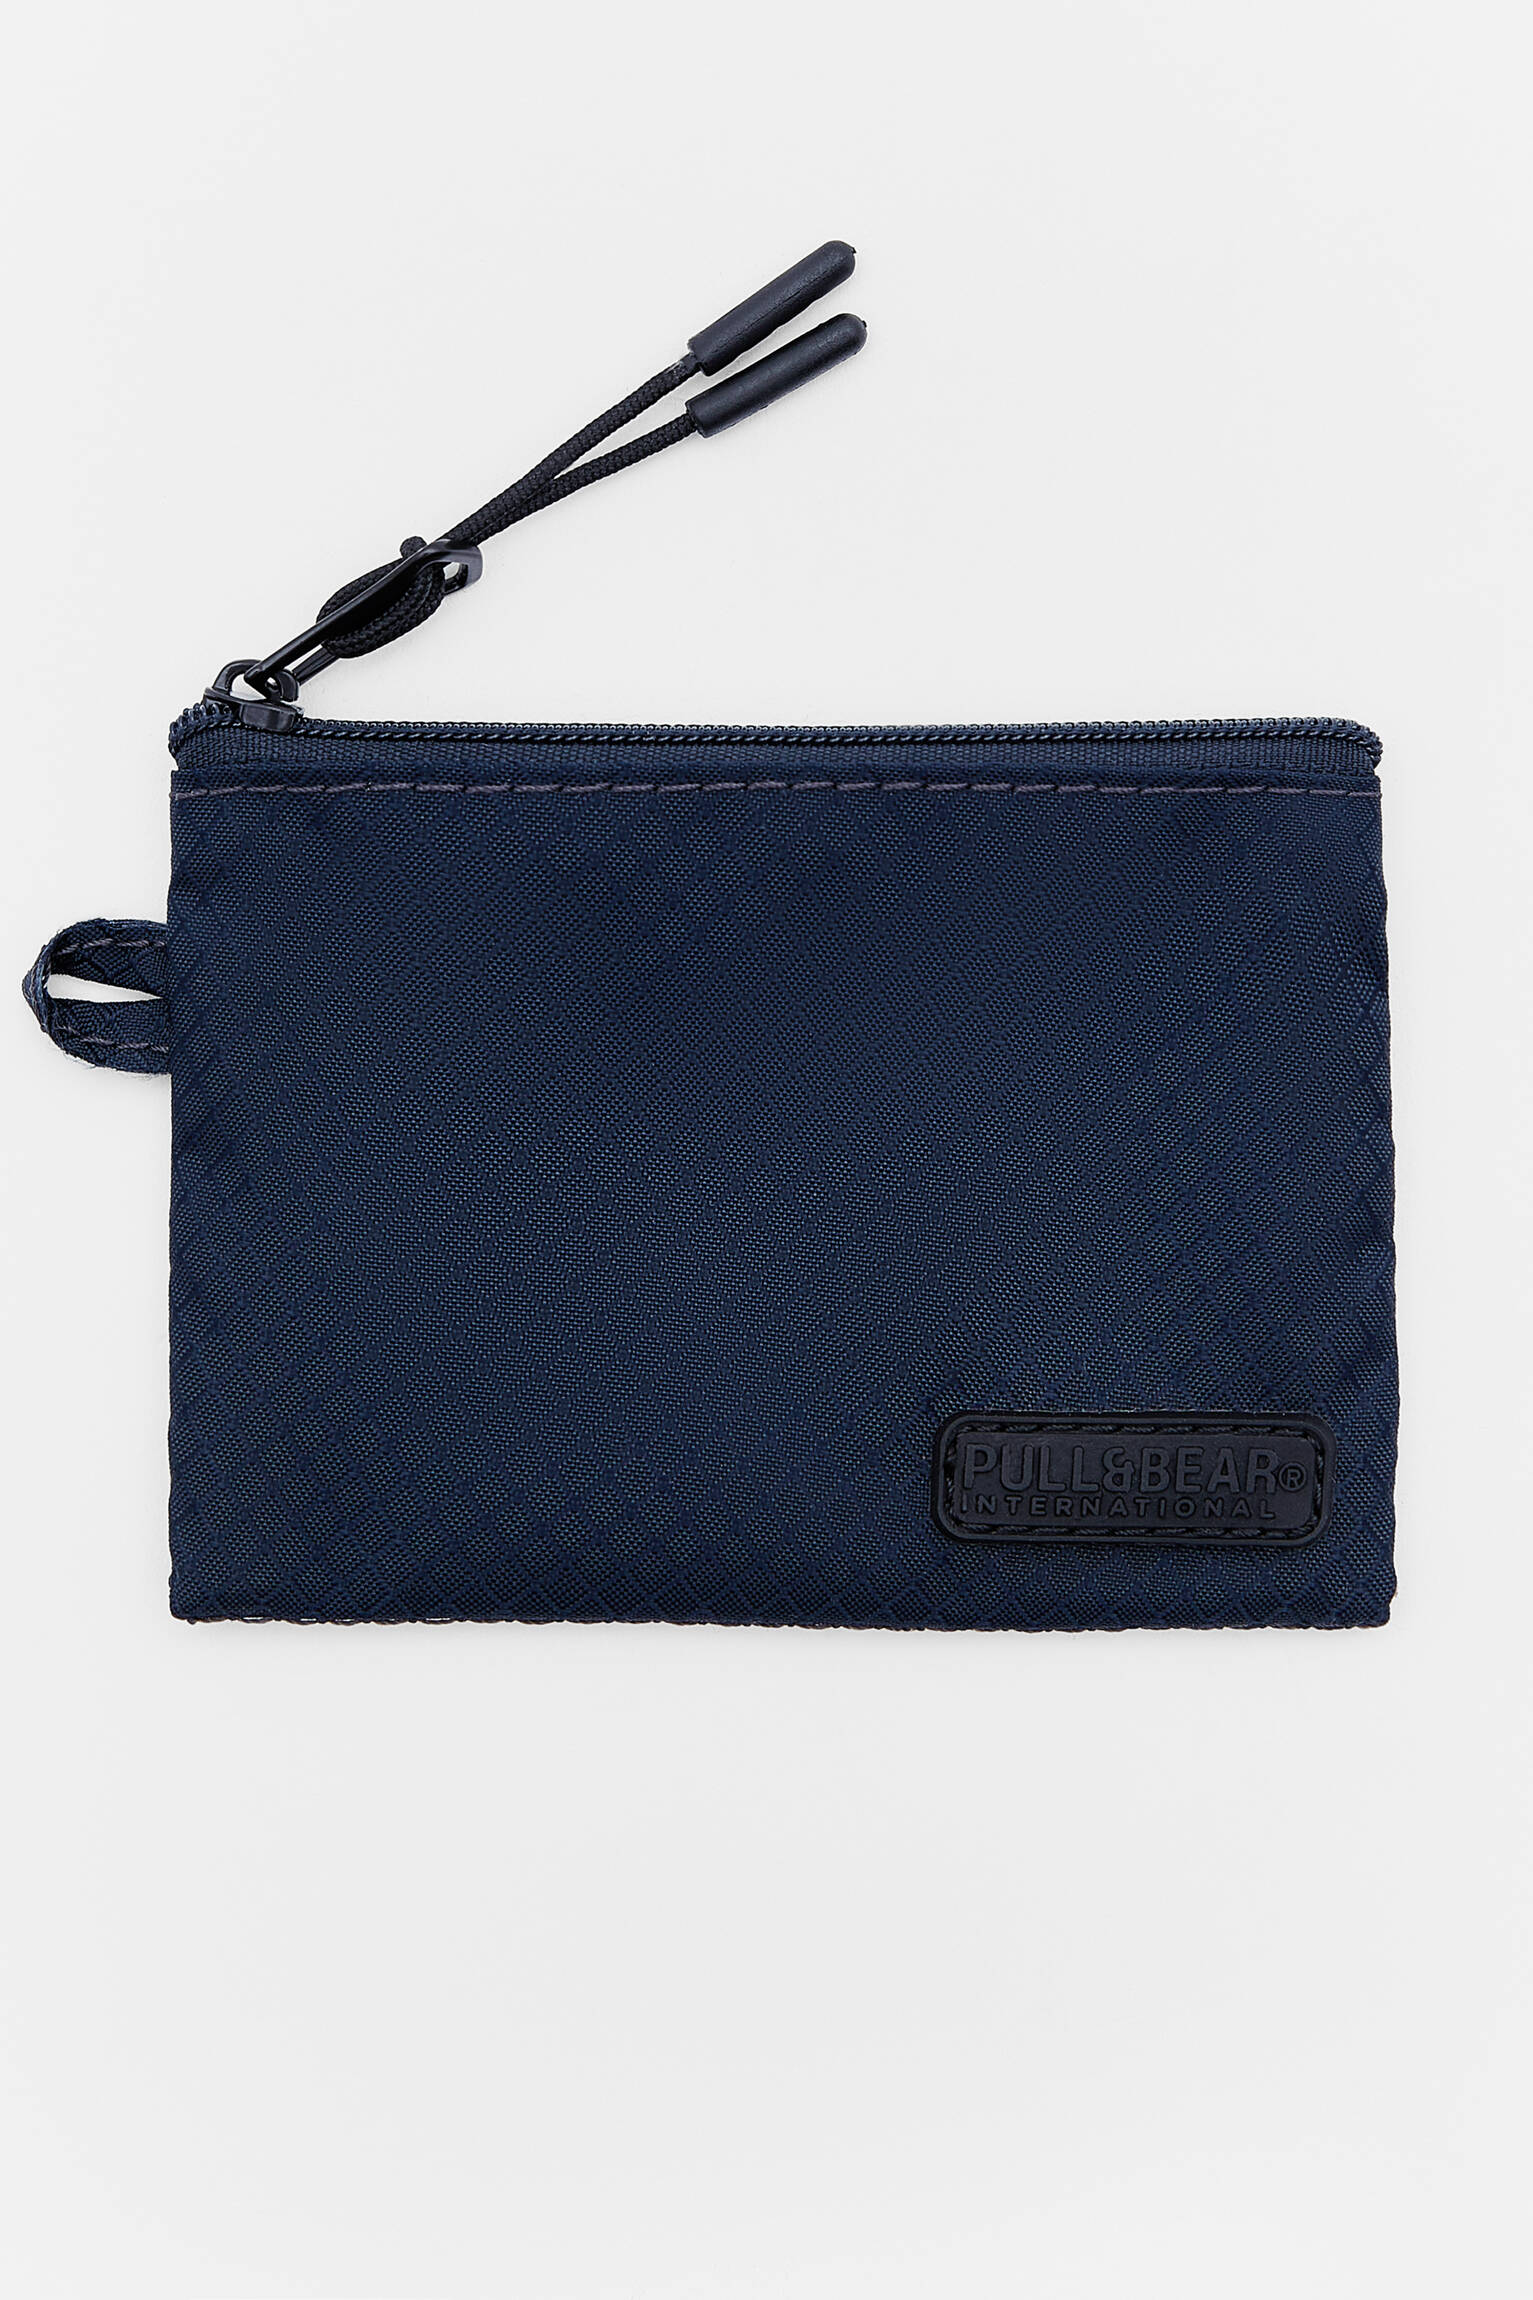 portefeuille bleu style sac pochette de randonnée